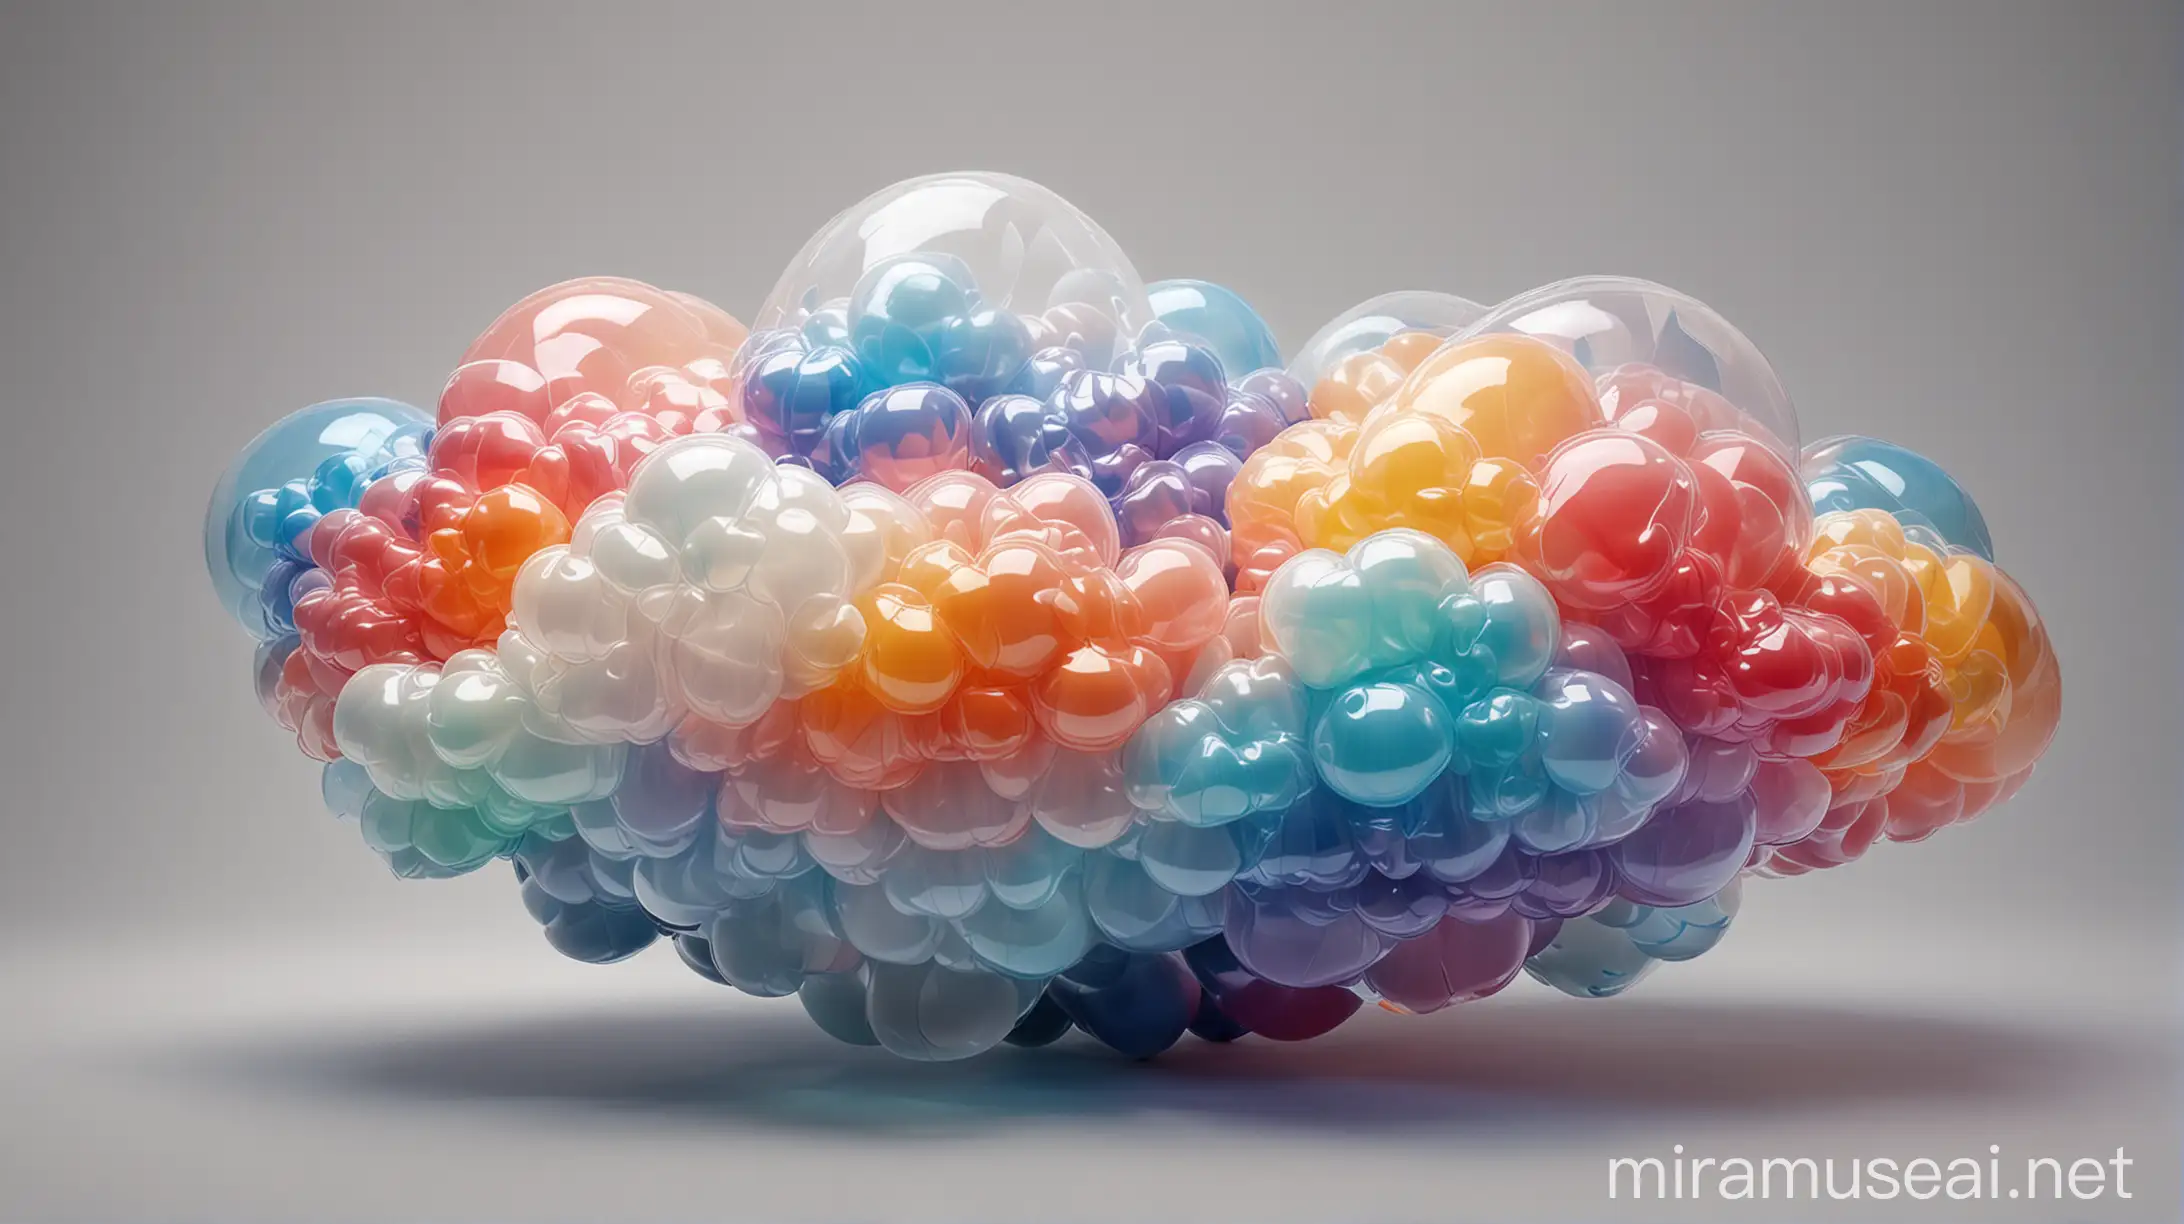 Vibrant Inflatable Cloud Sculpture with Transparent Tubes